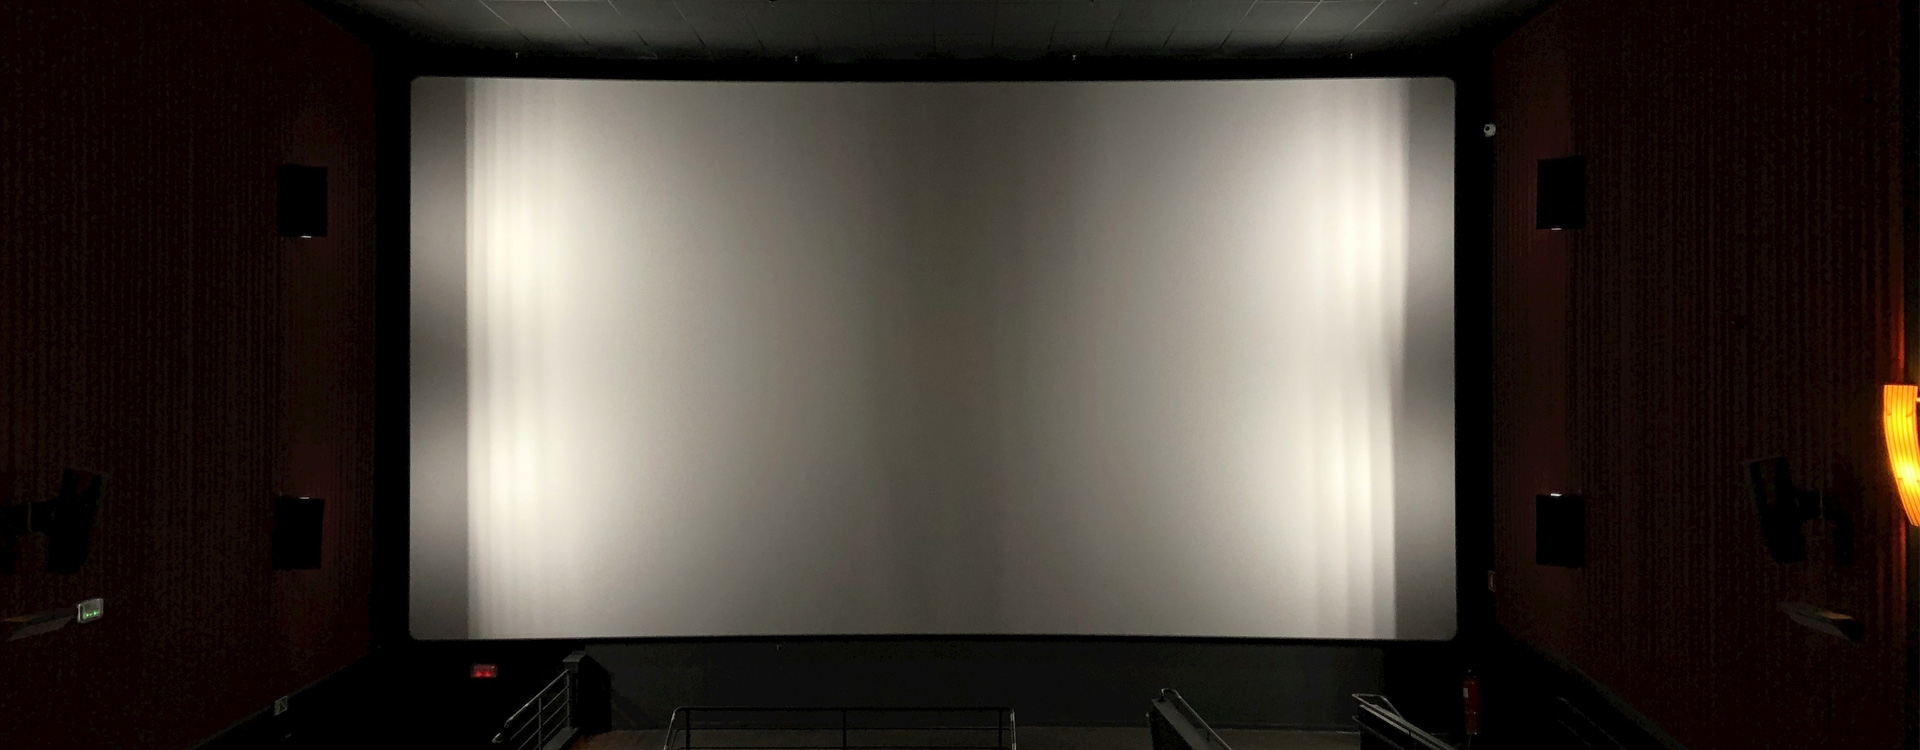 Jaki ekran do projektora?